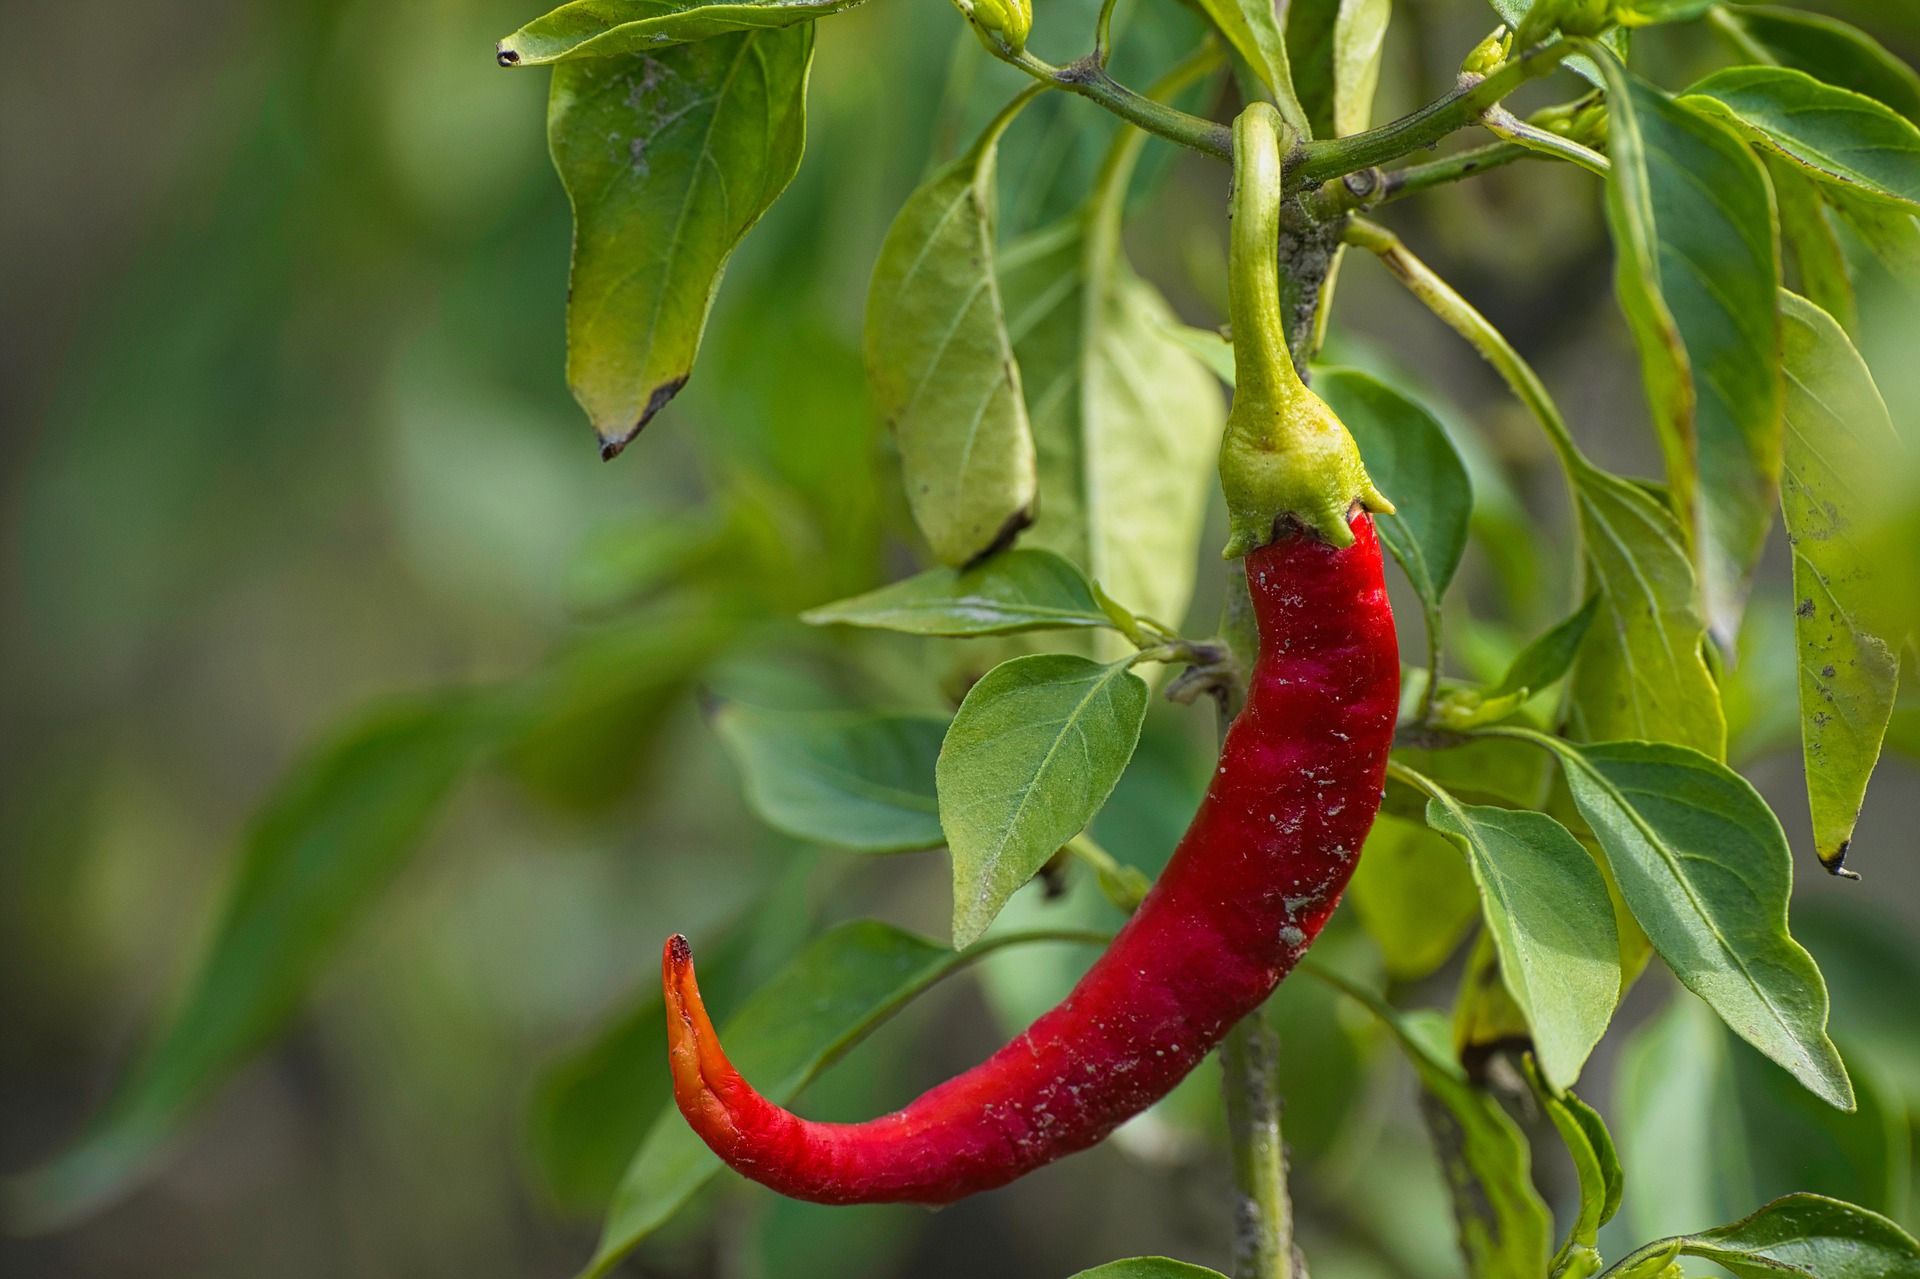 Chili pepper plants